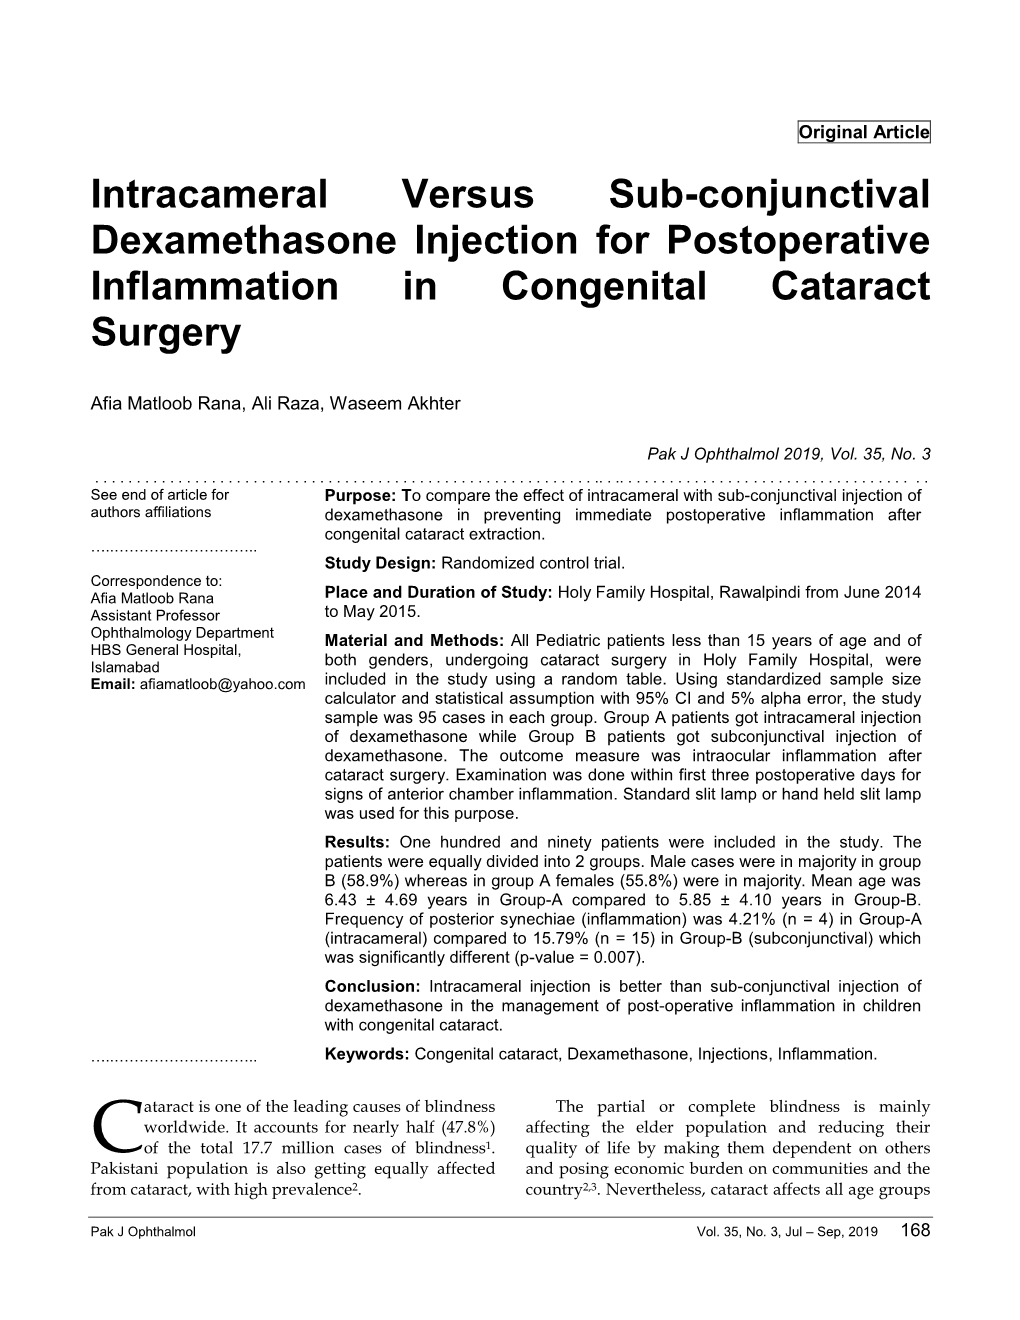 Intracameral Versus Sub-Conjunctival Dexamethasone Injection for Postoperative Inflammation in Congenital Cataract Surgery